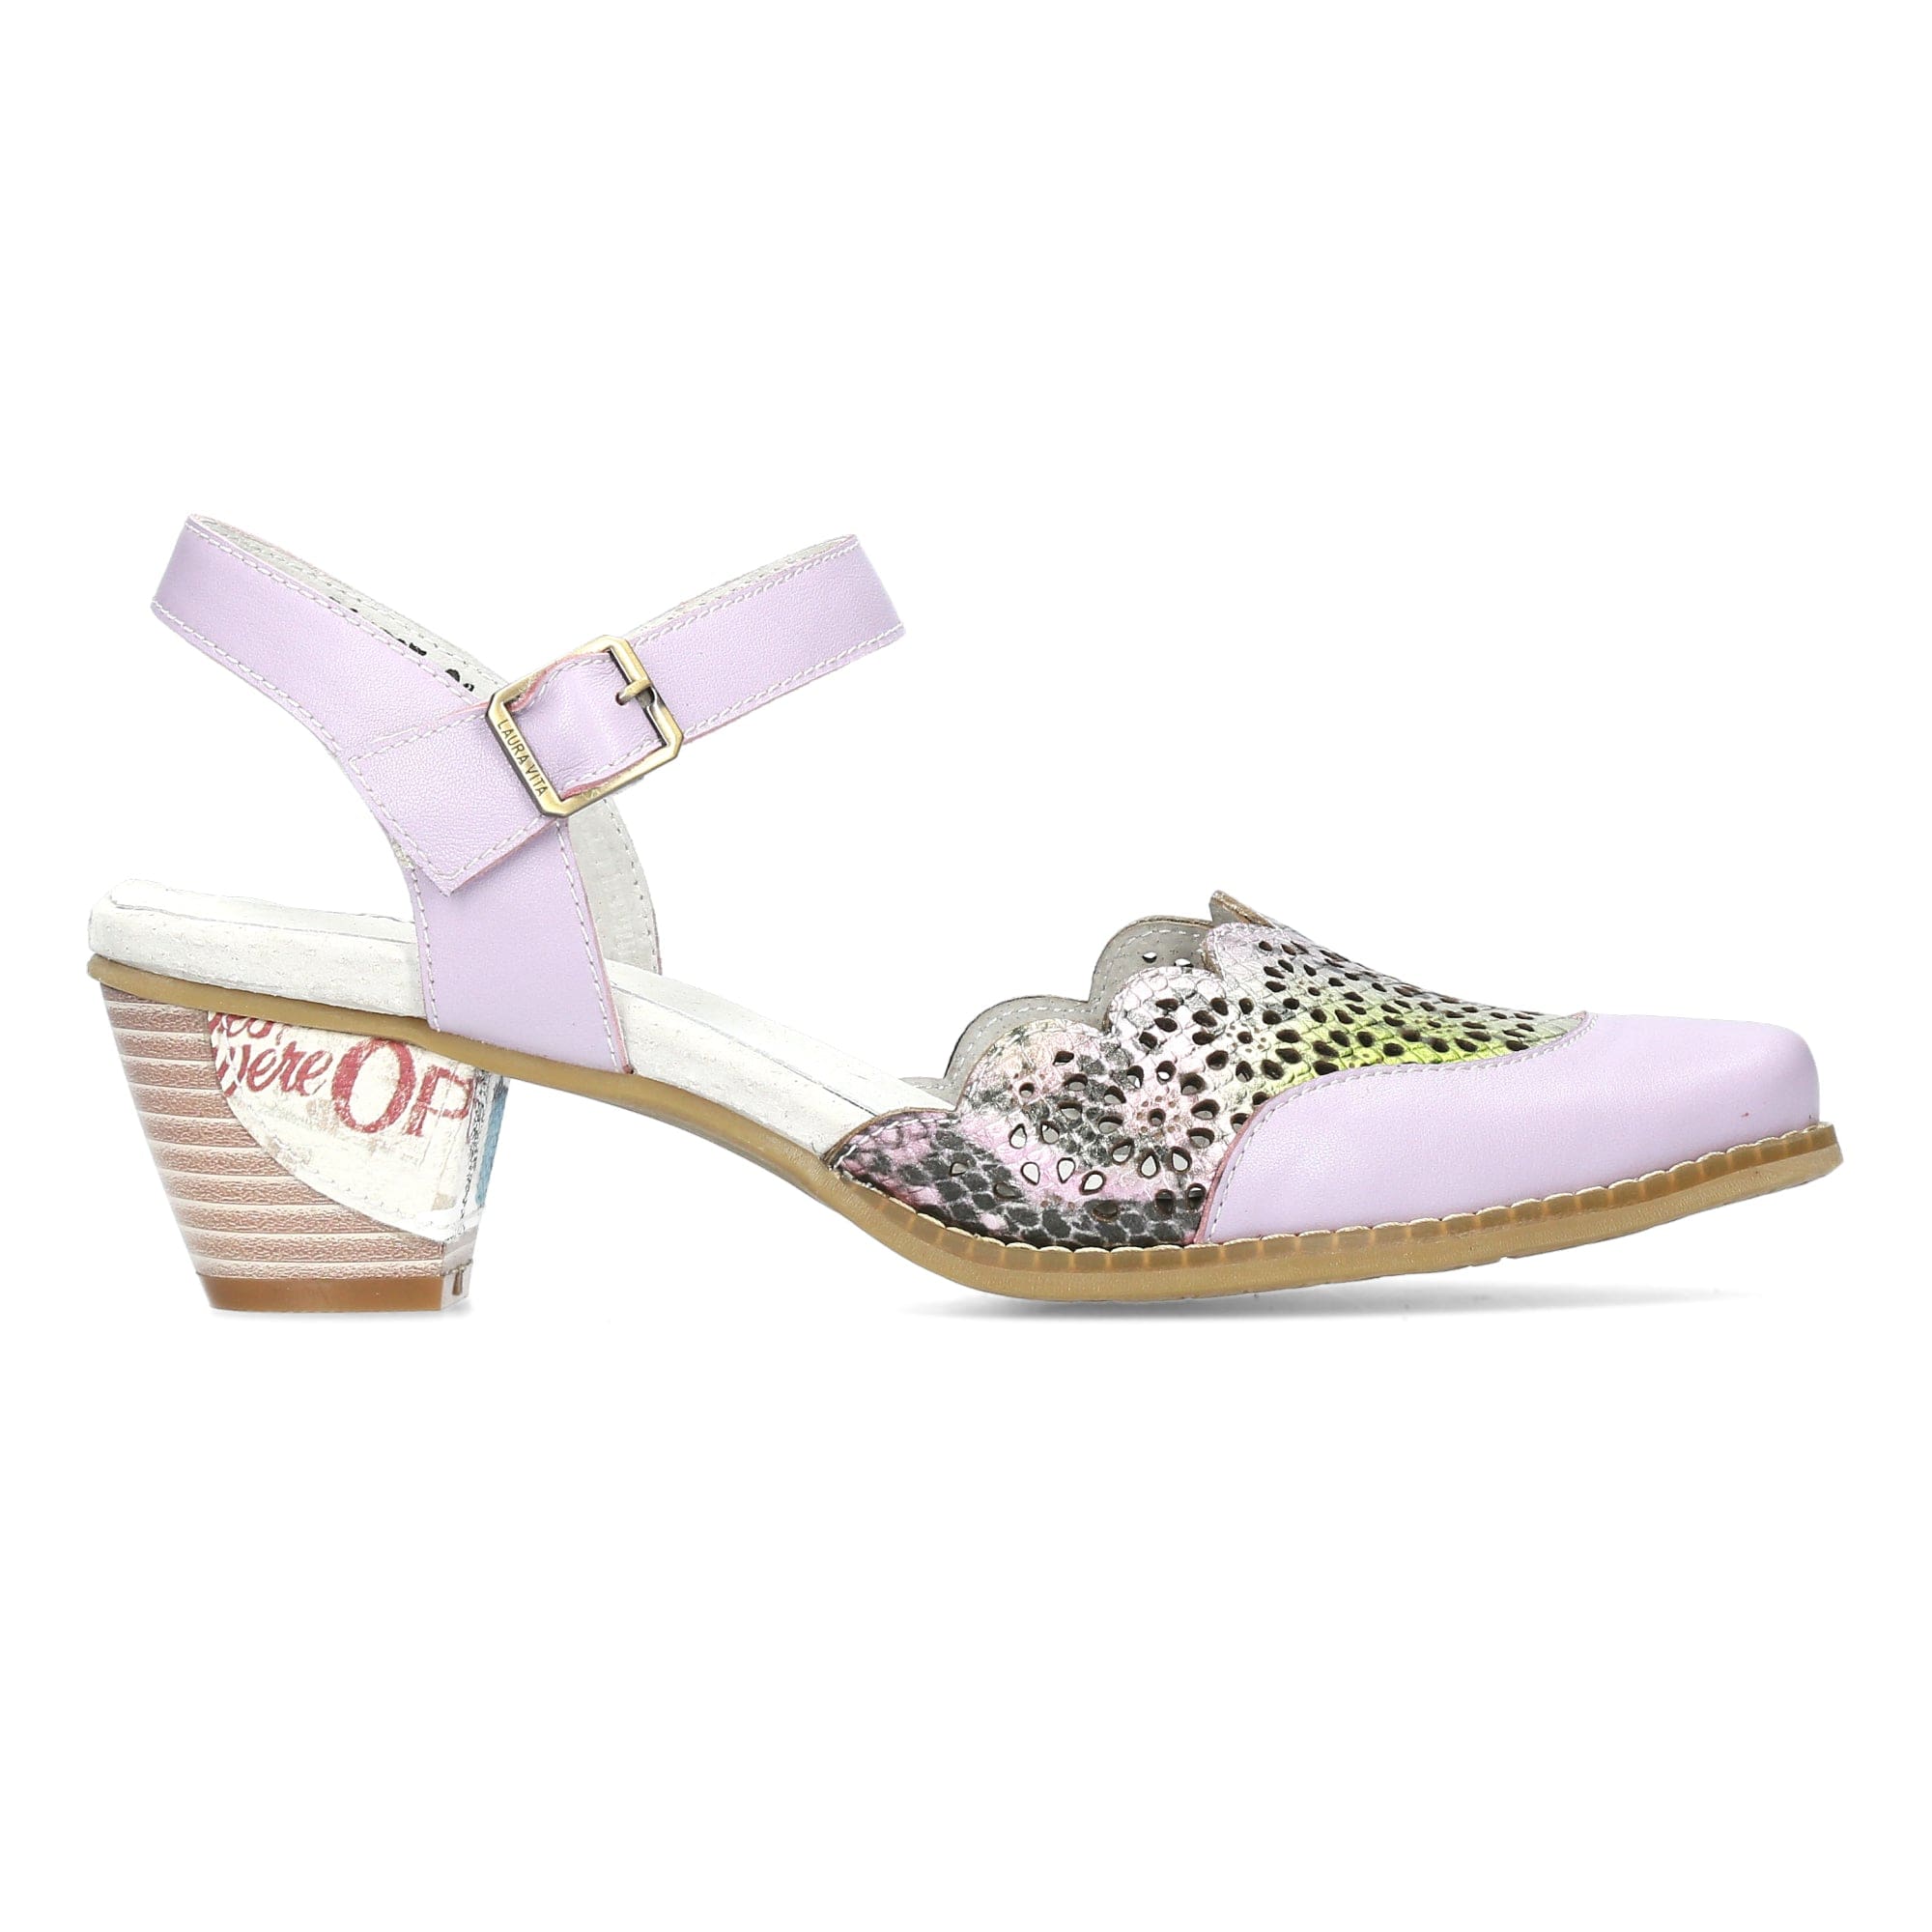 DONJON 04 Romance shoe - 39 / Parma - Sandal